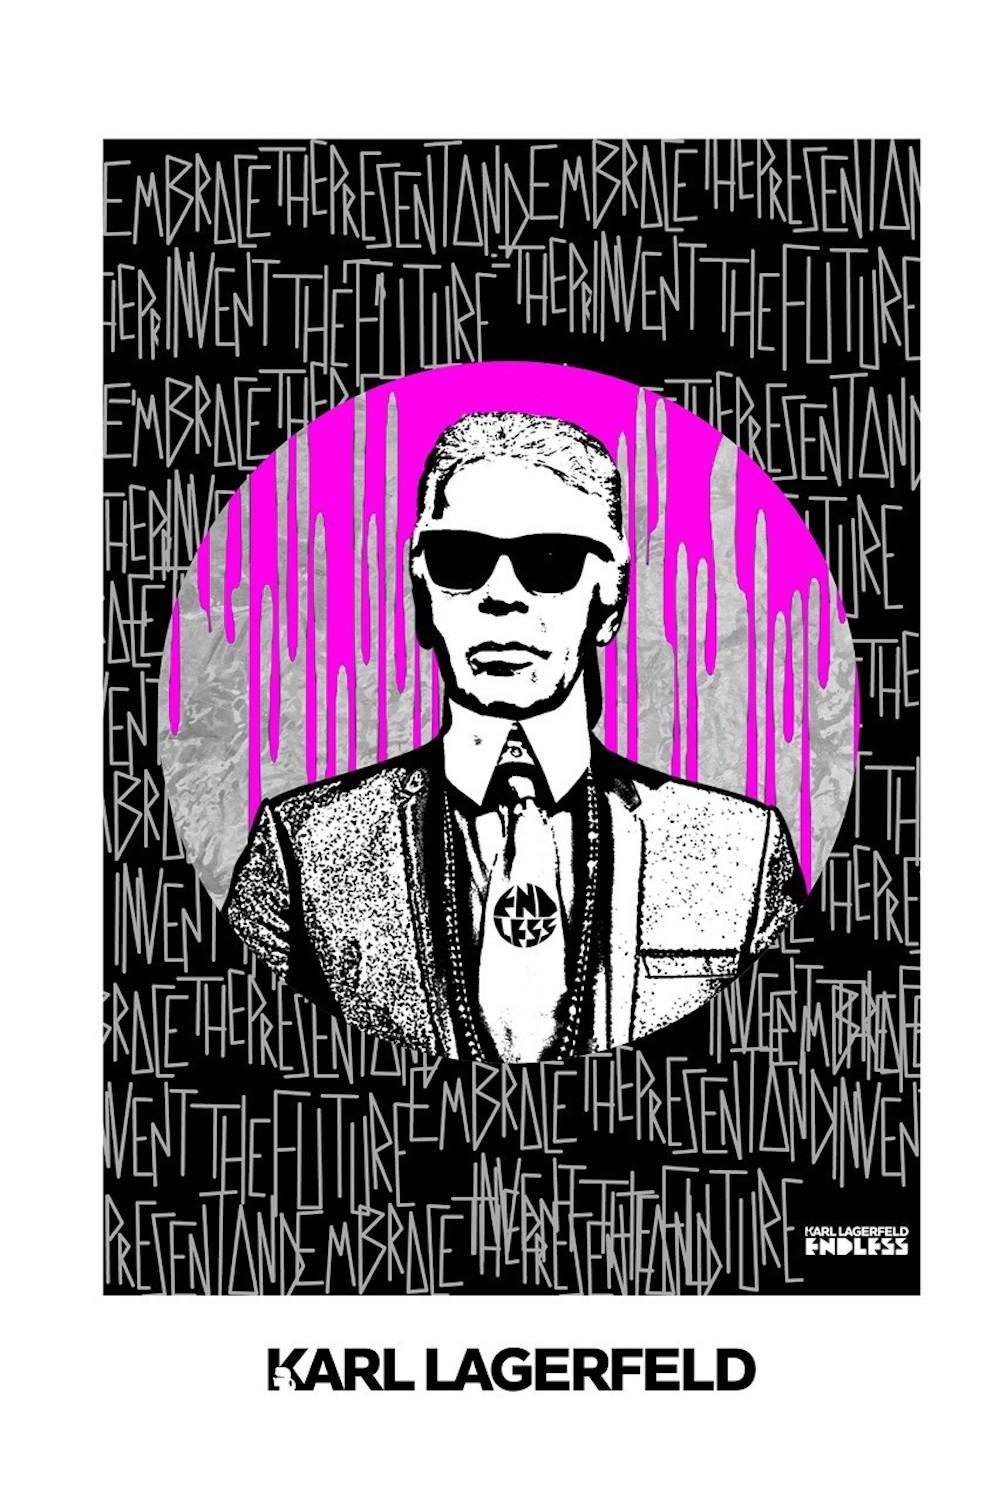 Pitti Uomo to Celebrate Karl Lagerfeld’s Legacy